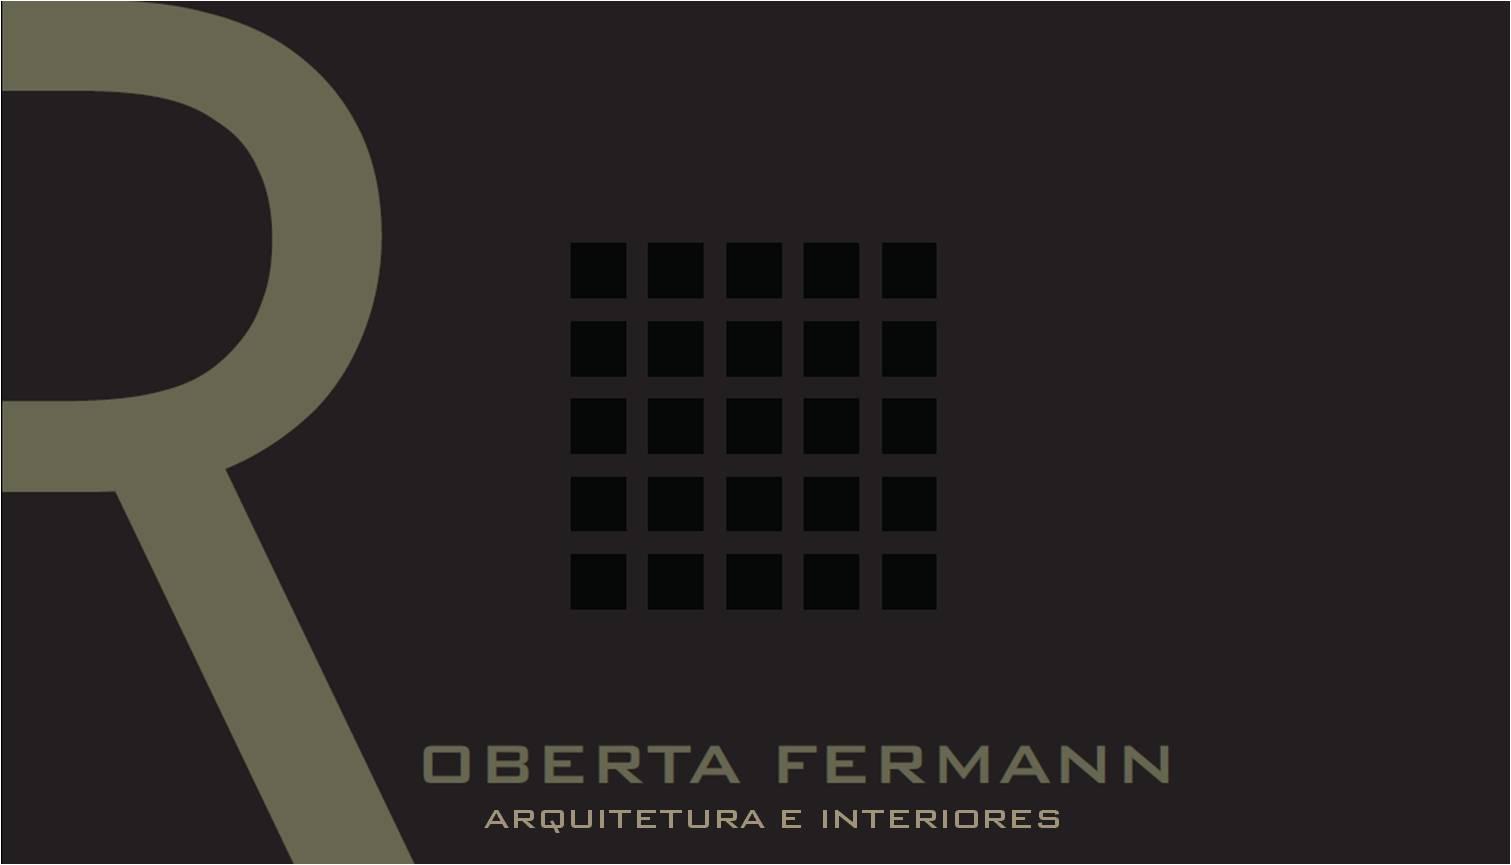 Roberta Fermann Arquitetura e Interiores logo